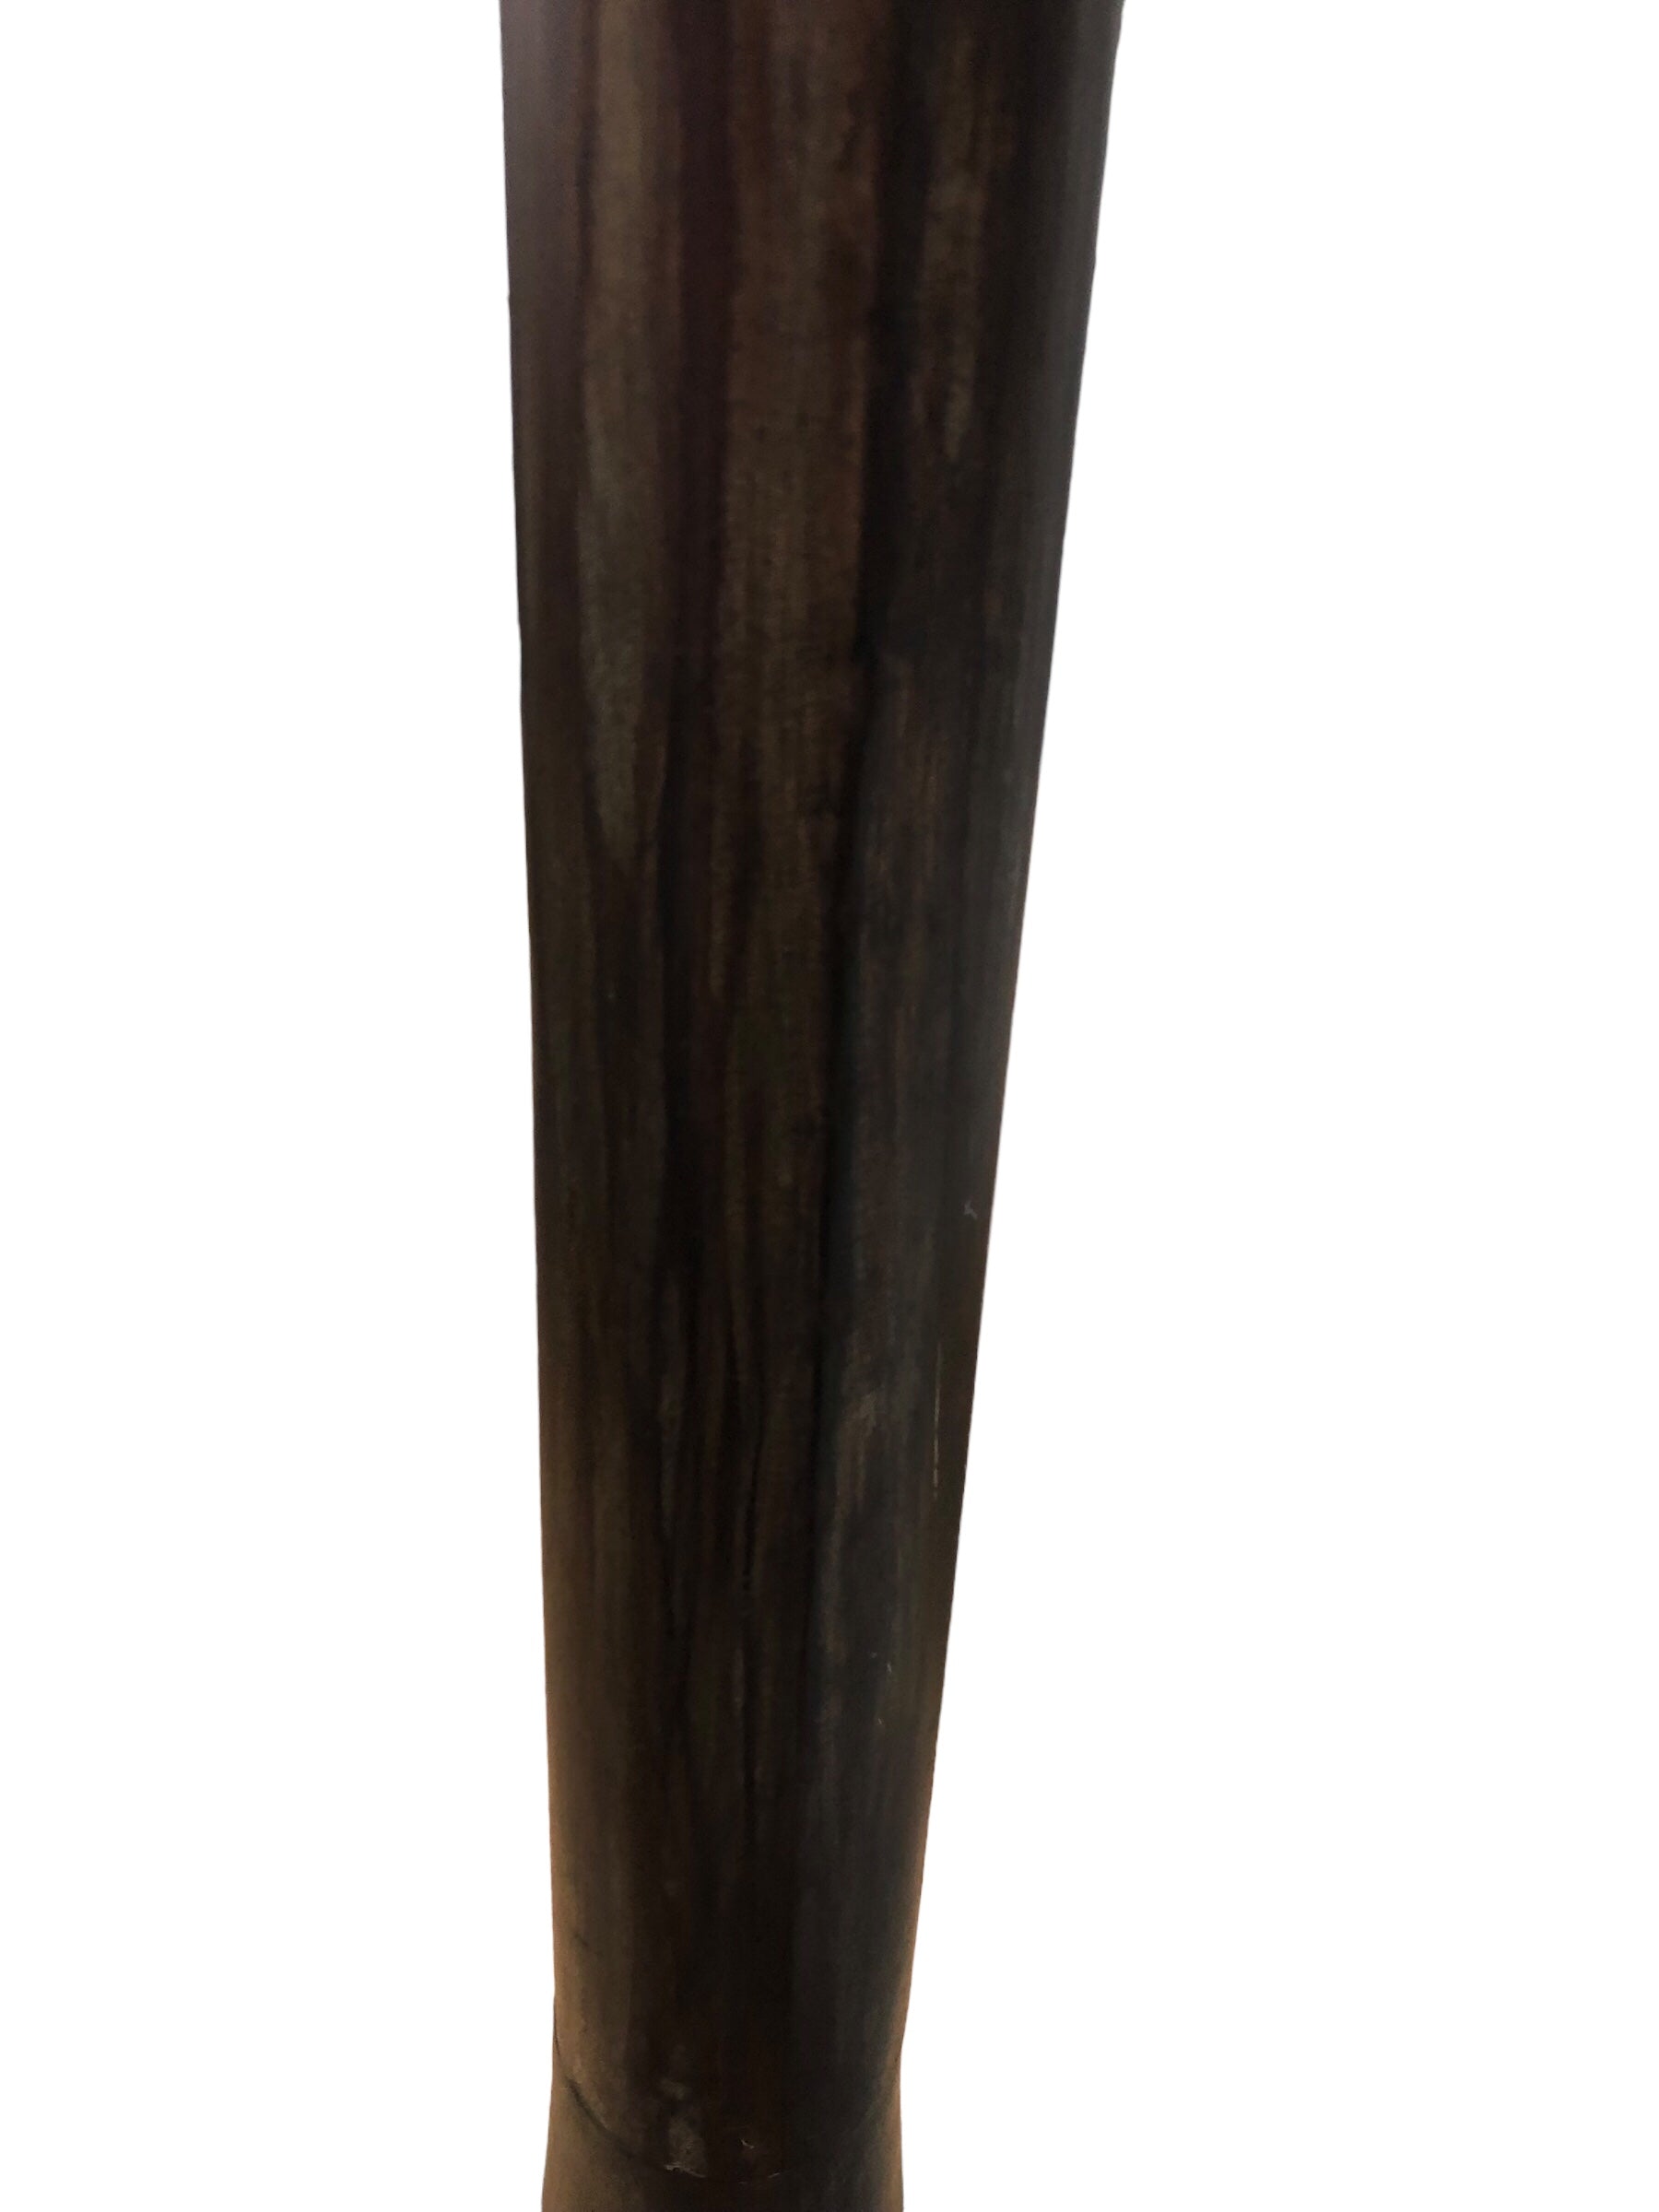 Tall brown vase